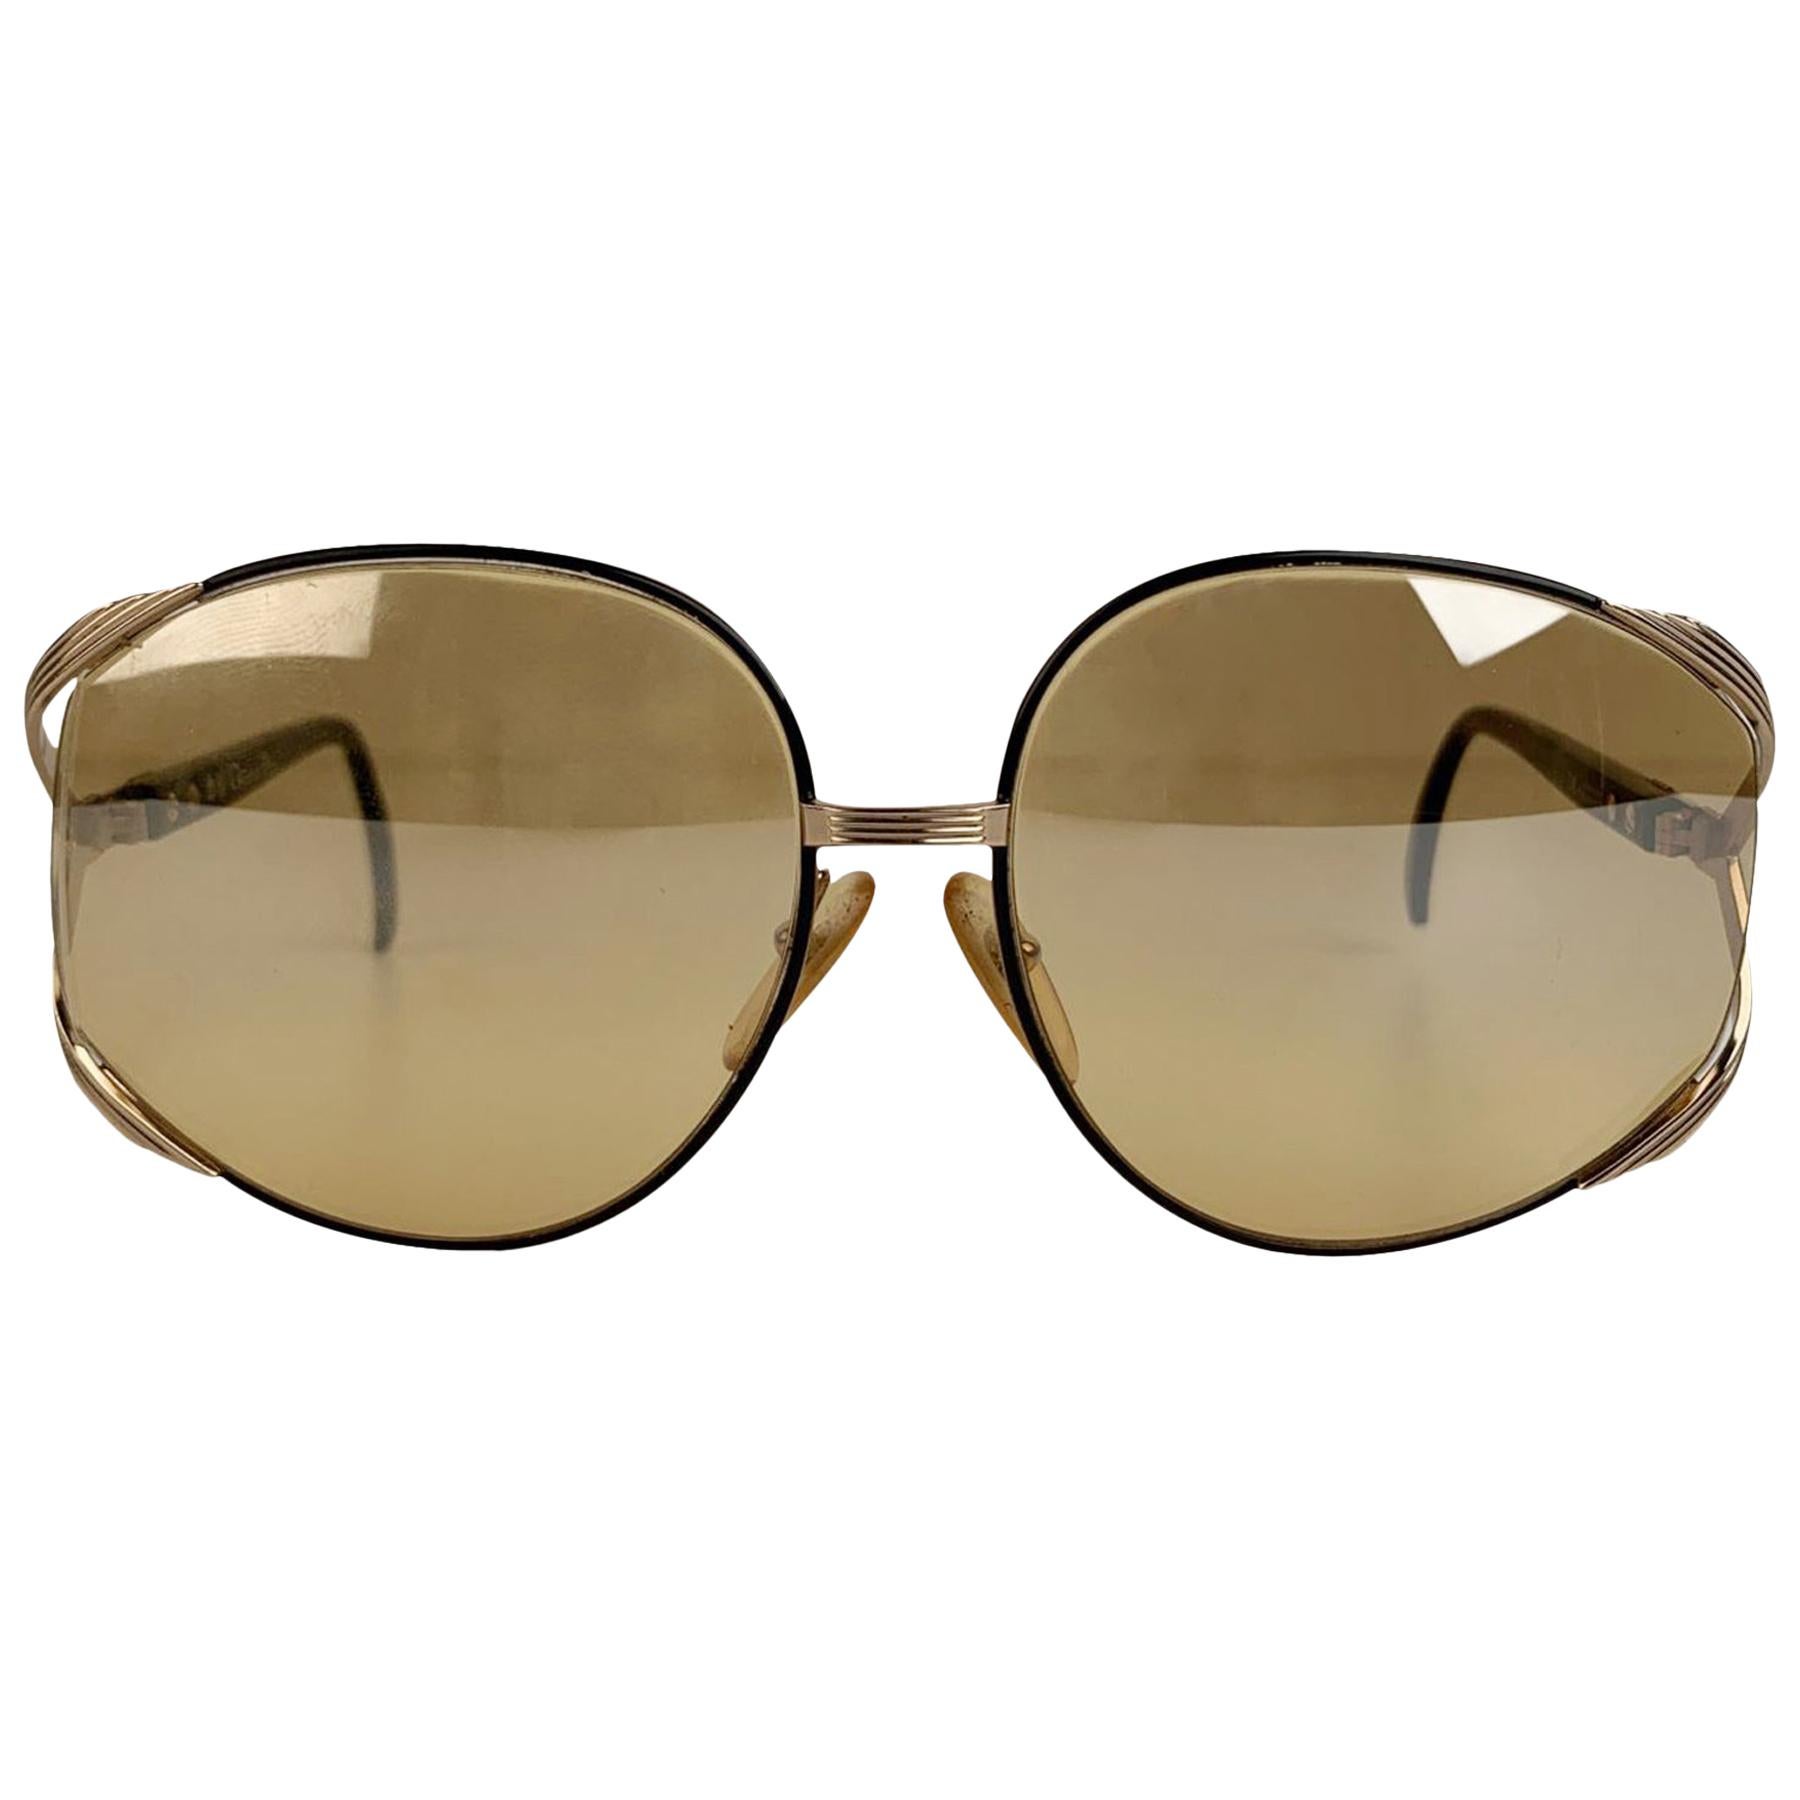 Christian Dior Vintage Gold Metal and Black Sunglasses Mod 2250 